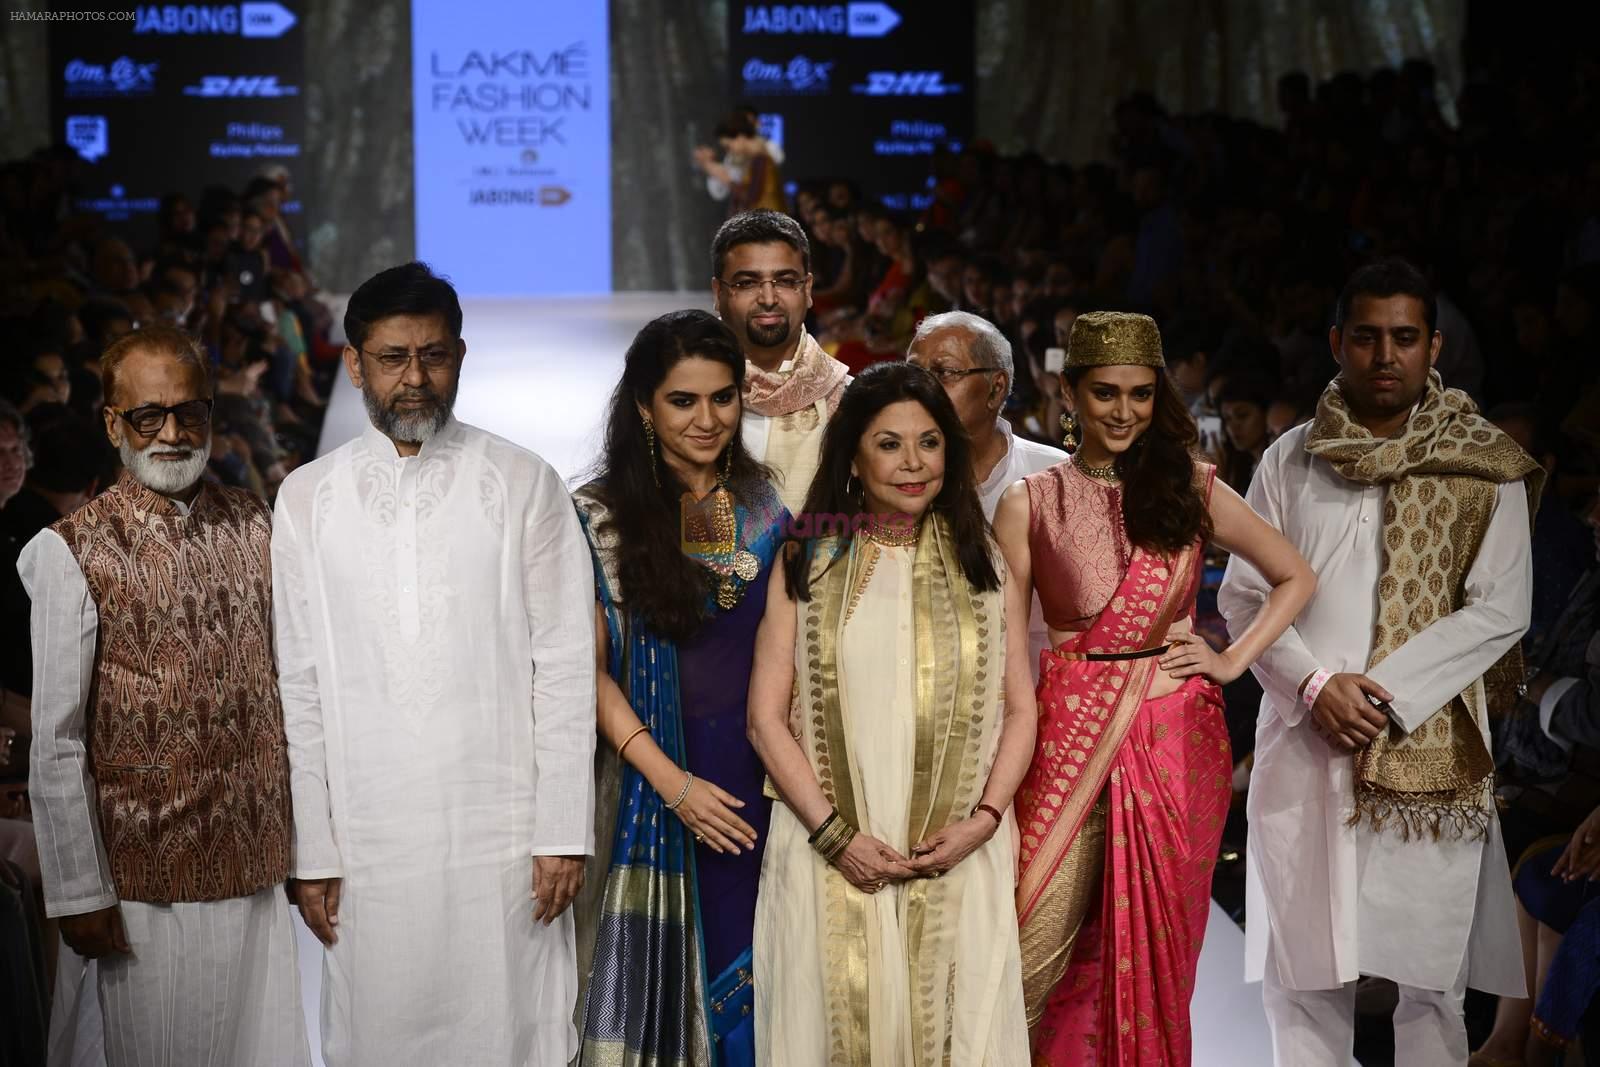 Aditi Rao Hydari walks for Ritu Kumar Show on day 2 of lifw on 27th Aug 2015